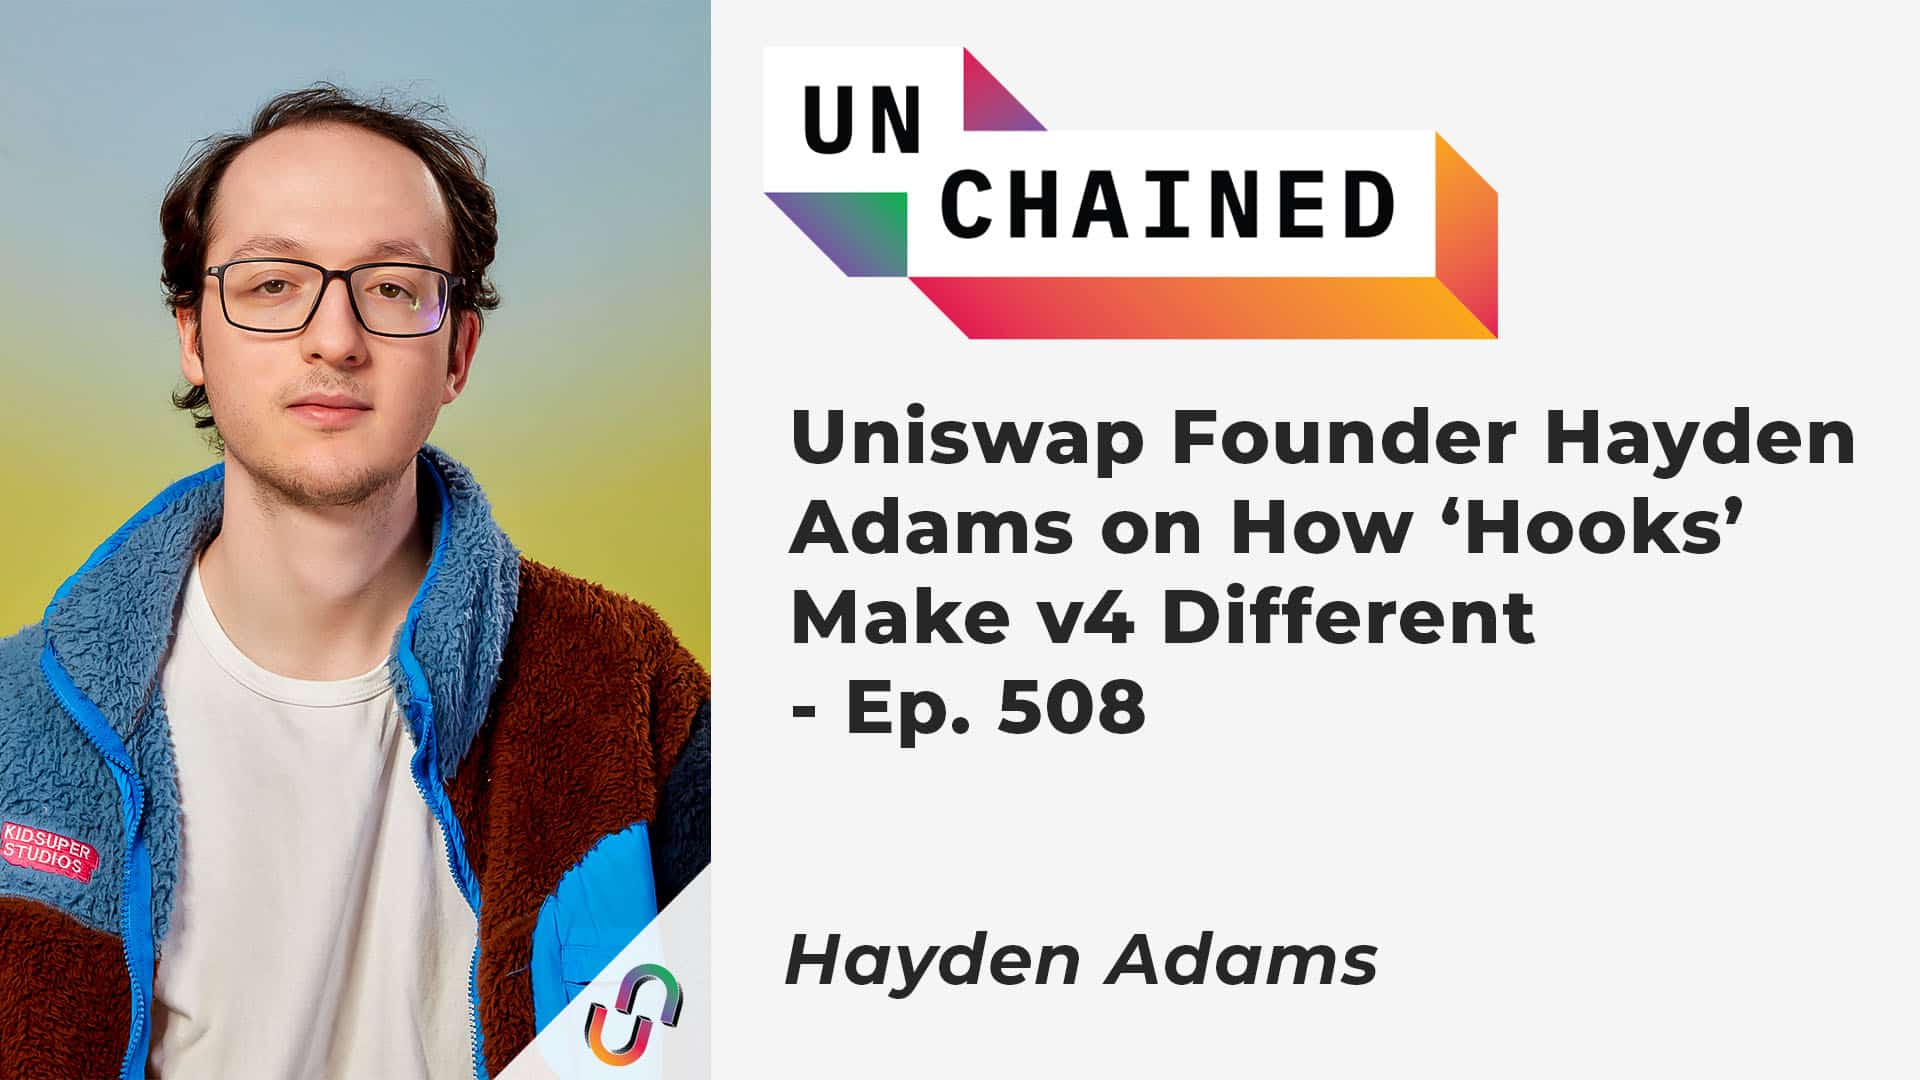 Uniswap Founder Hayden Adams on How ‘Hooks’ Make v4 Different - Ep. 508